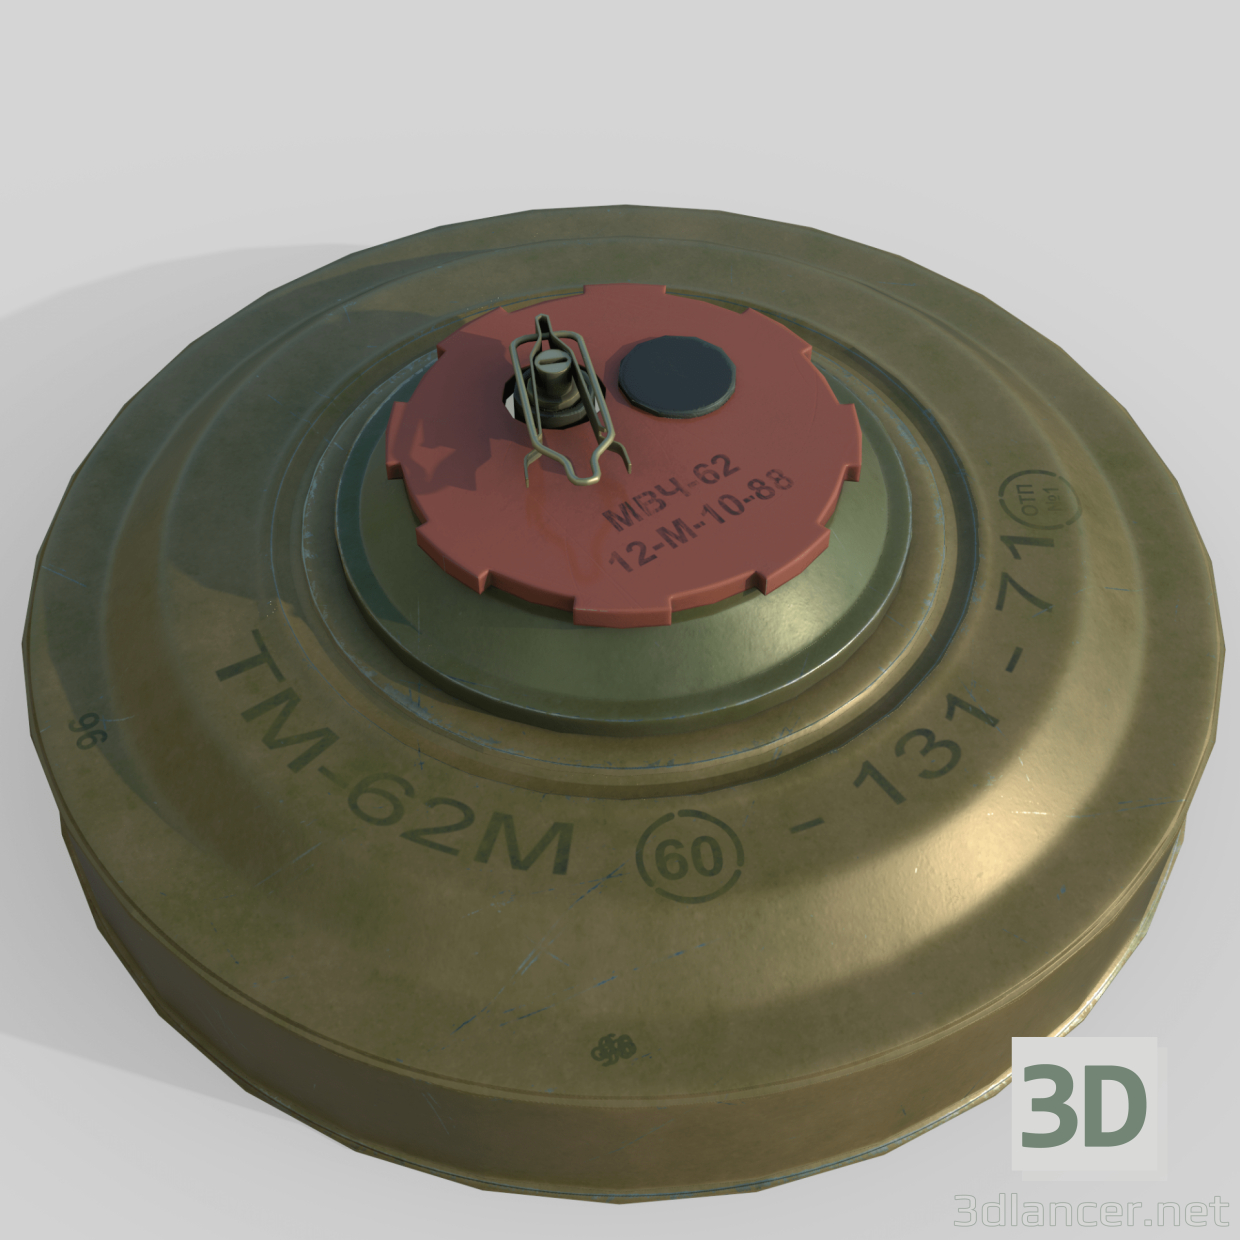 3d Mine TM-62M model buy - render